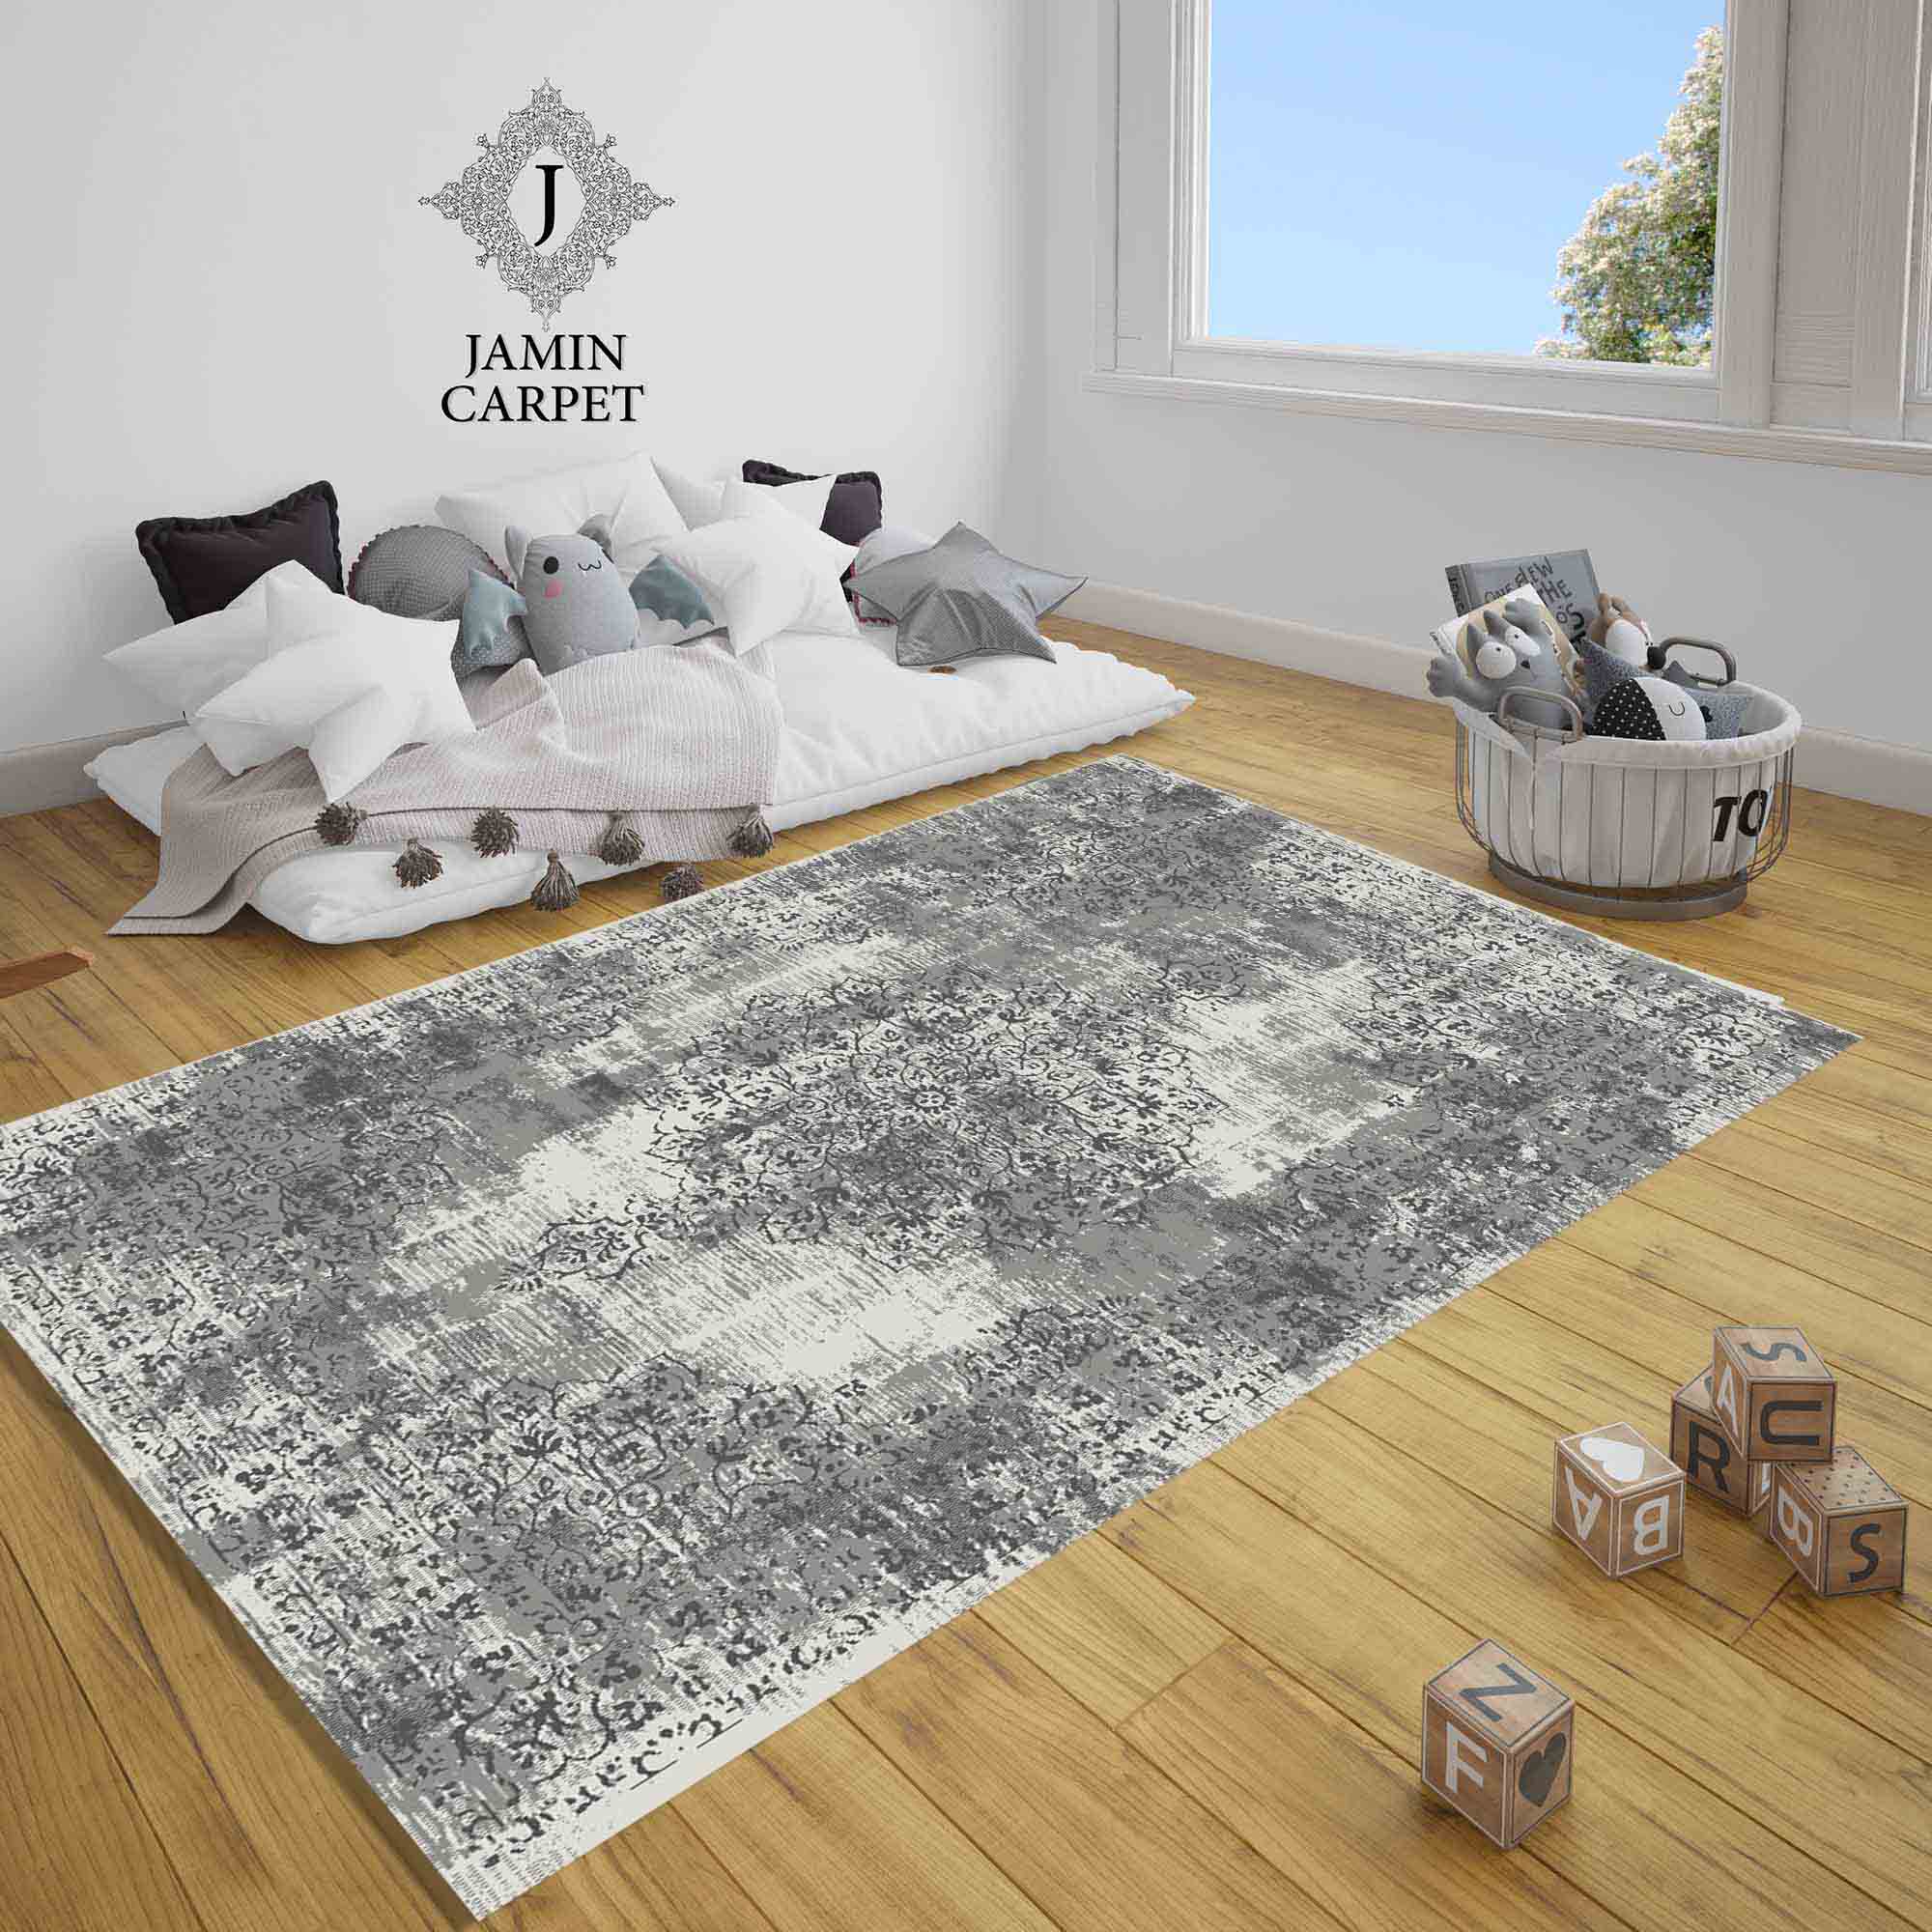 Fantasy carpet code 223 comb 400 density 1800 all acrylic